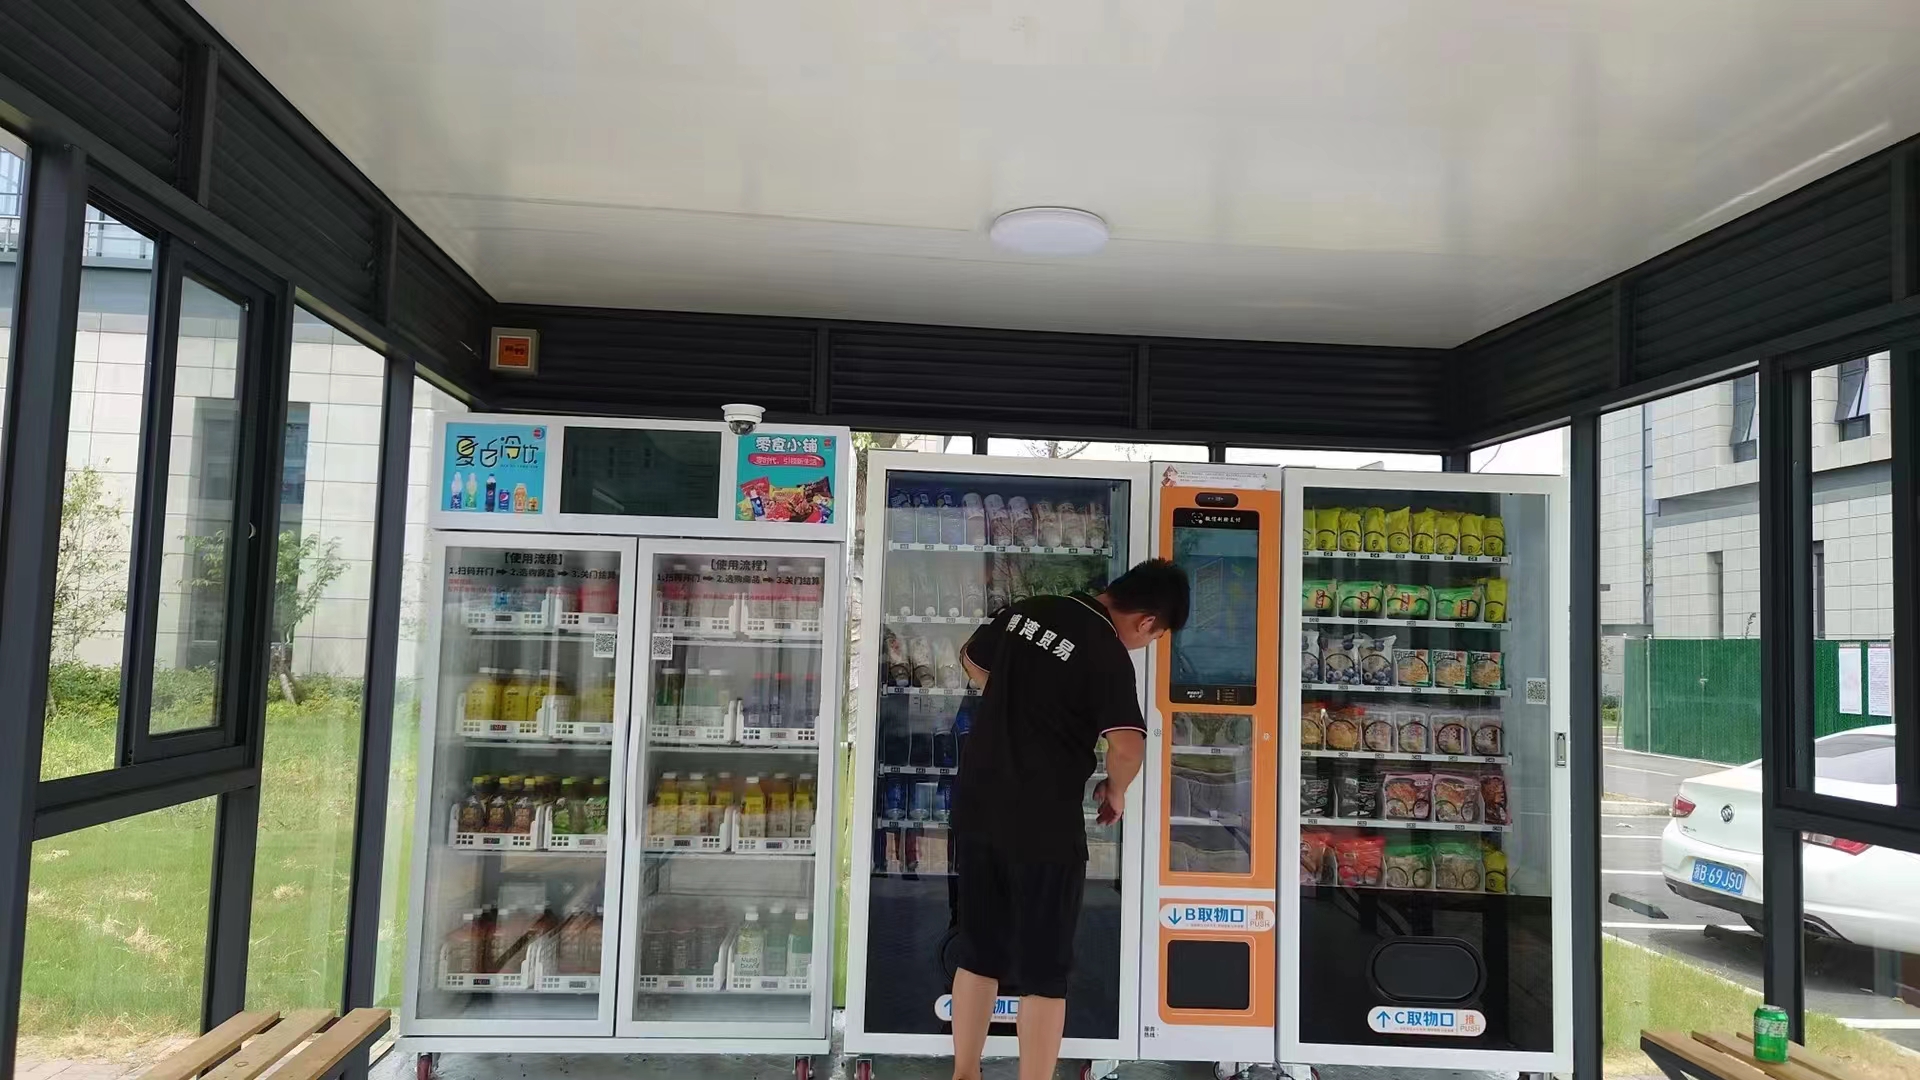 smart fridge vending machine and spiral vending machine in the city park